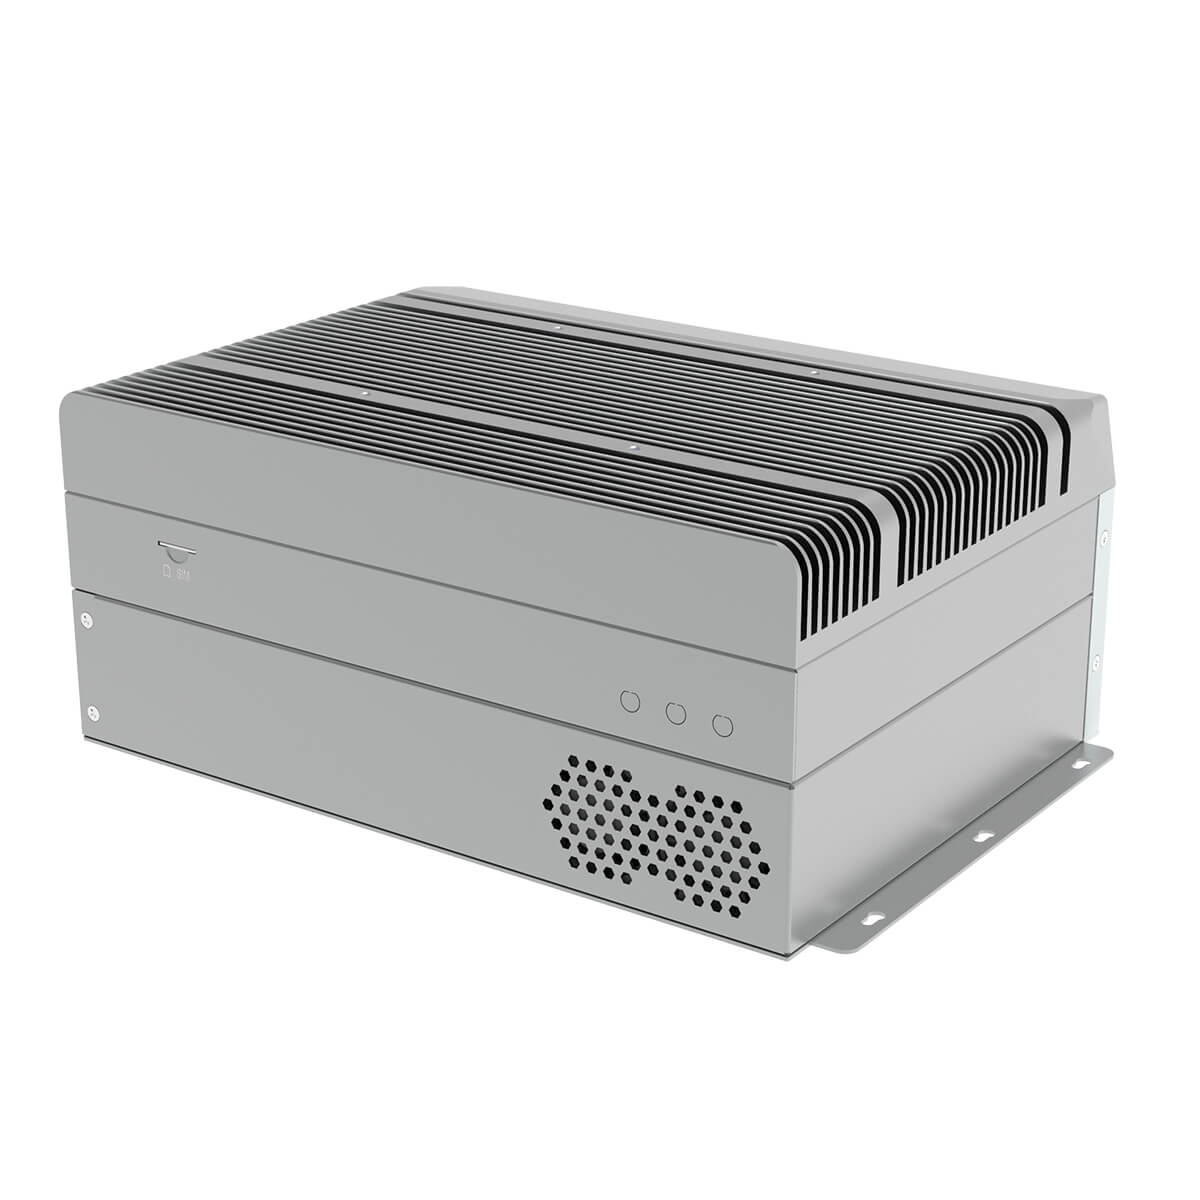 ABOX-E7DL – Industrial Box PCi7-9700T/16G RAM/1TB SSD/Fanless/ 1*DVI-D/ 1*DP/ 1*VGA/ 2*RJ45/ 6*USB3.0/6*RS232/ DC 9~36V/1* PCIE 16X+ 1* PCI/-20~60°C